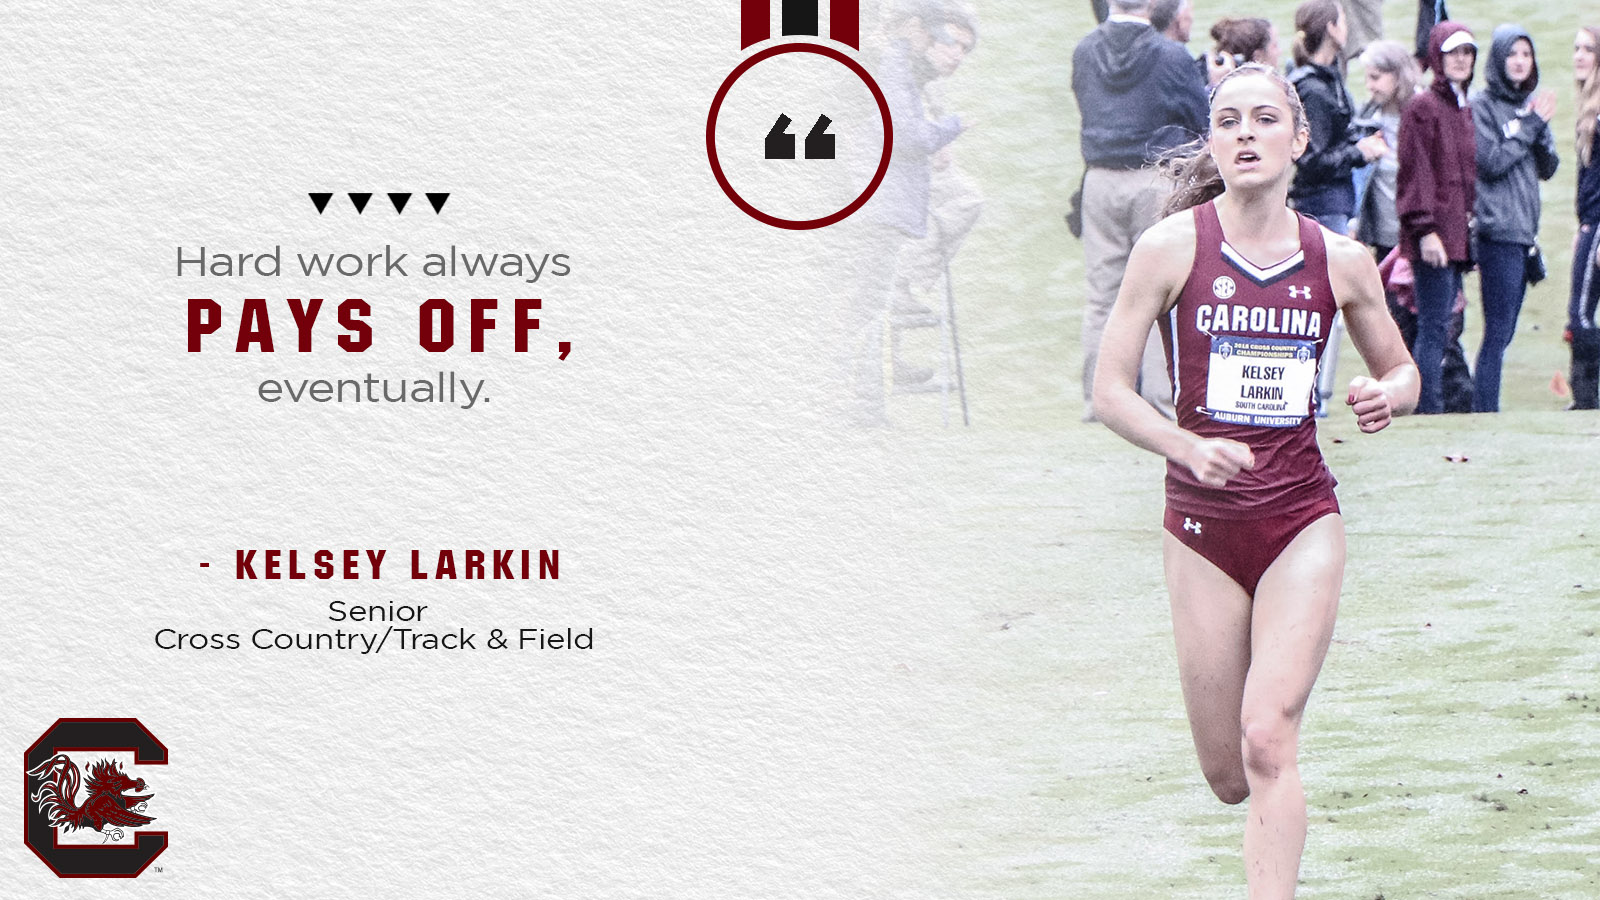 Kelsey Larkin has no problem overcoming obstacles